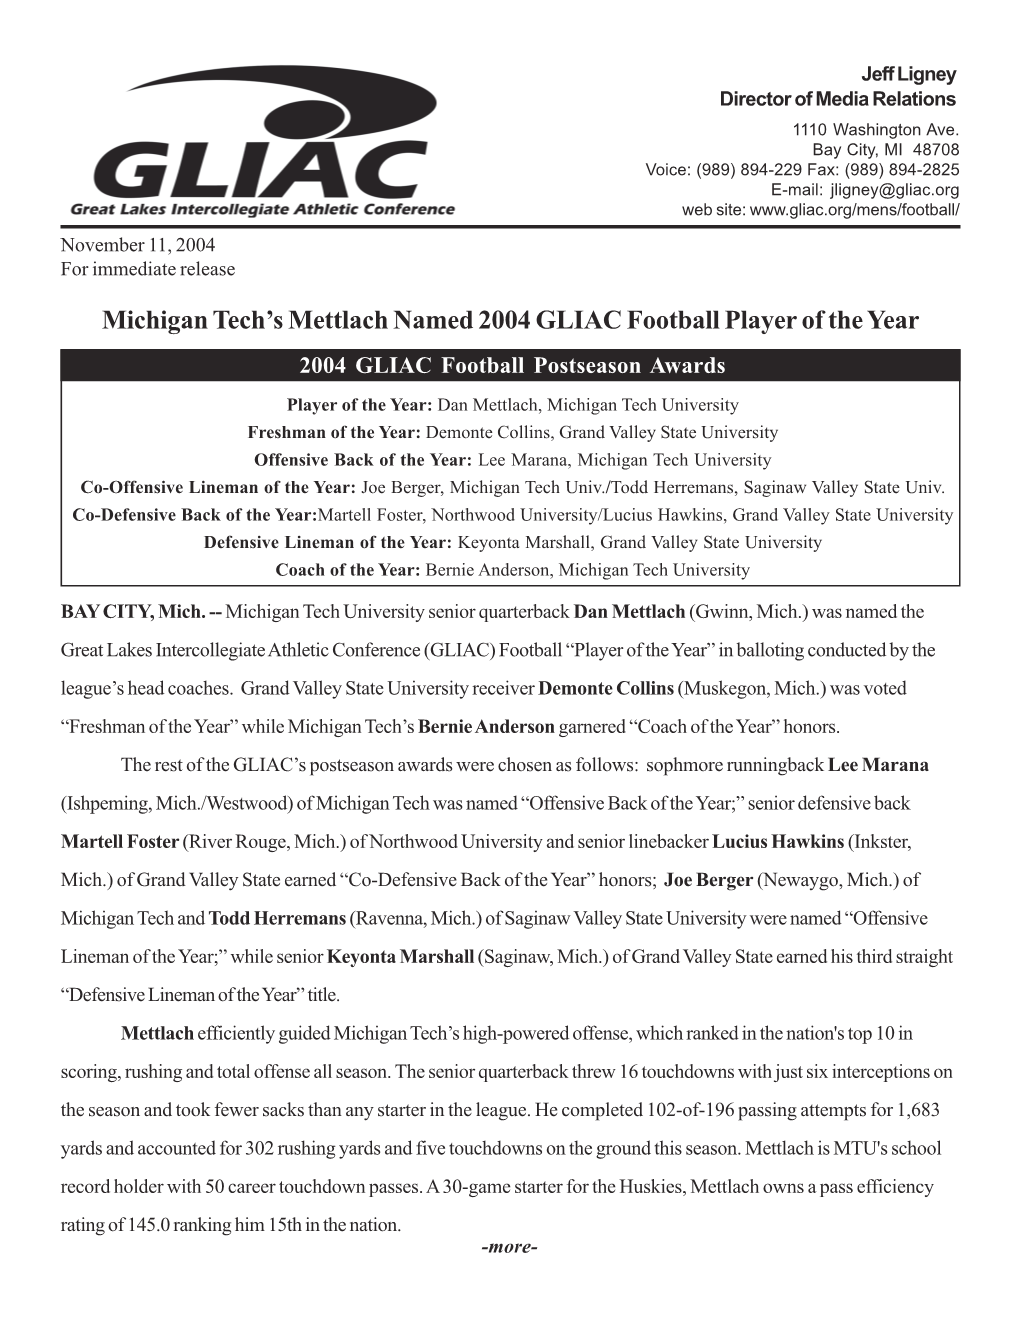 Michigan Tech's Mettlach Named 2004 GLIAC Football Player